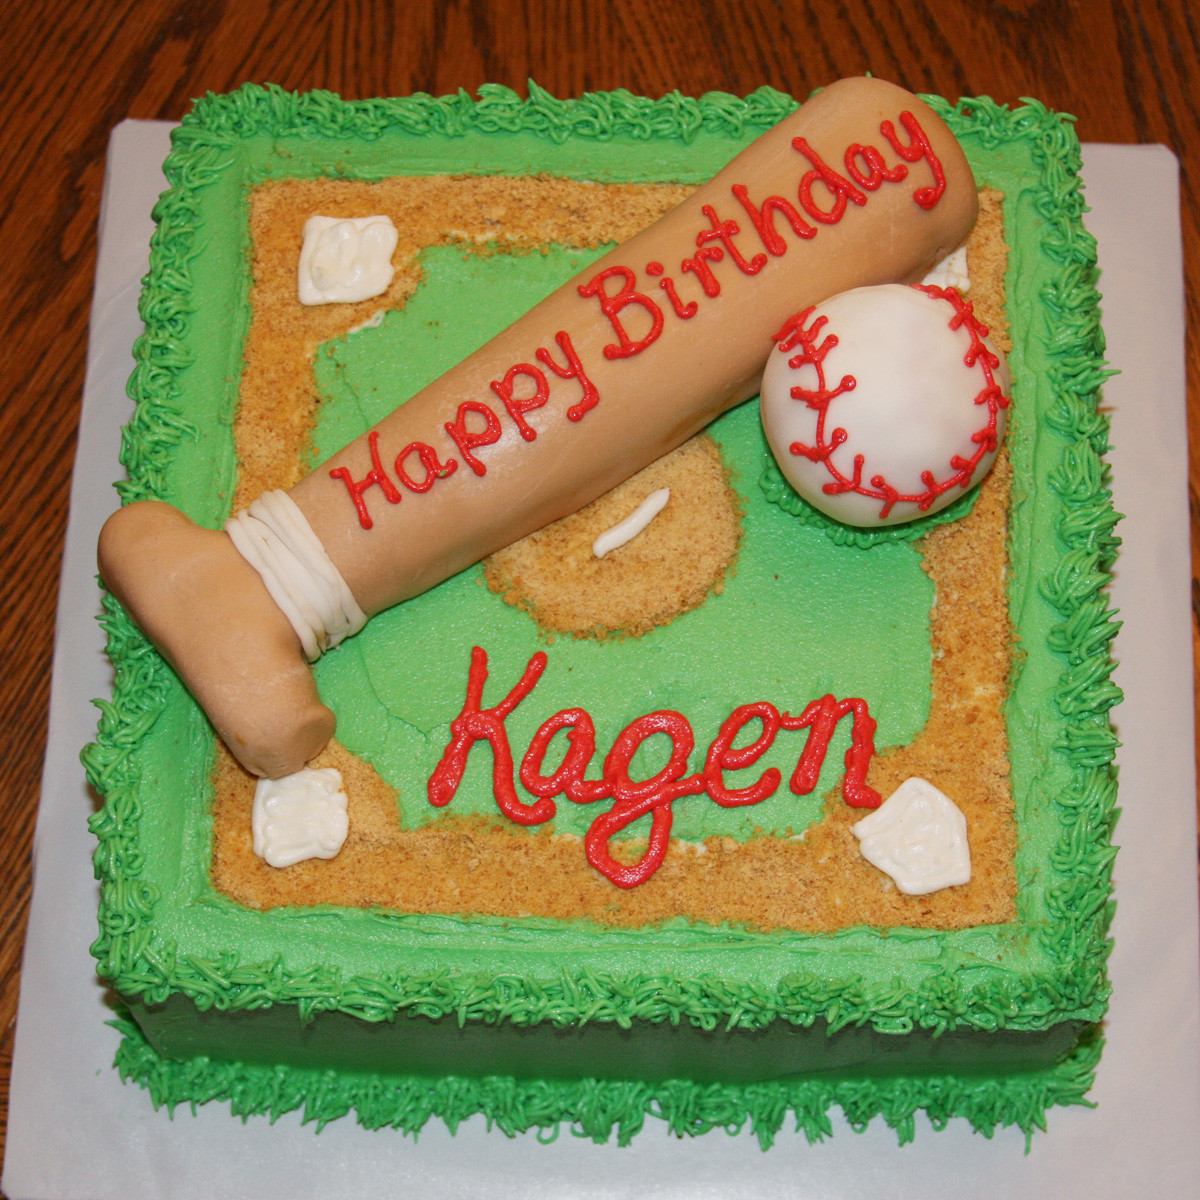 Baseball Birthday Cakes
 Carla s Cakes Baseball Birthday Cake